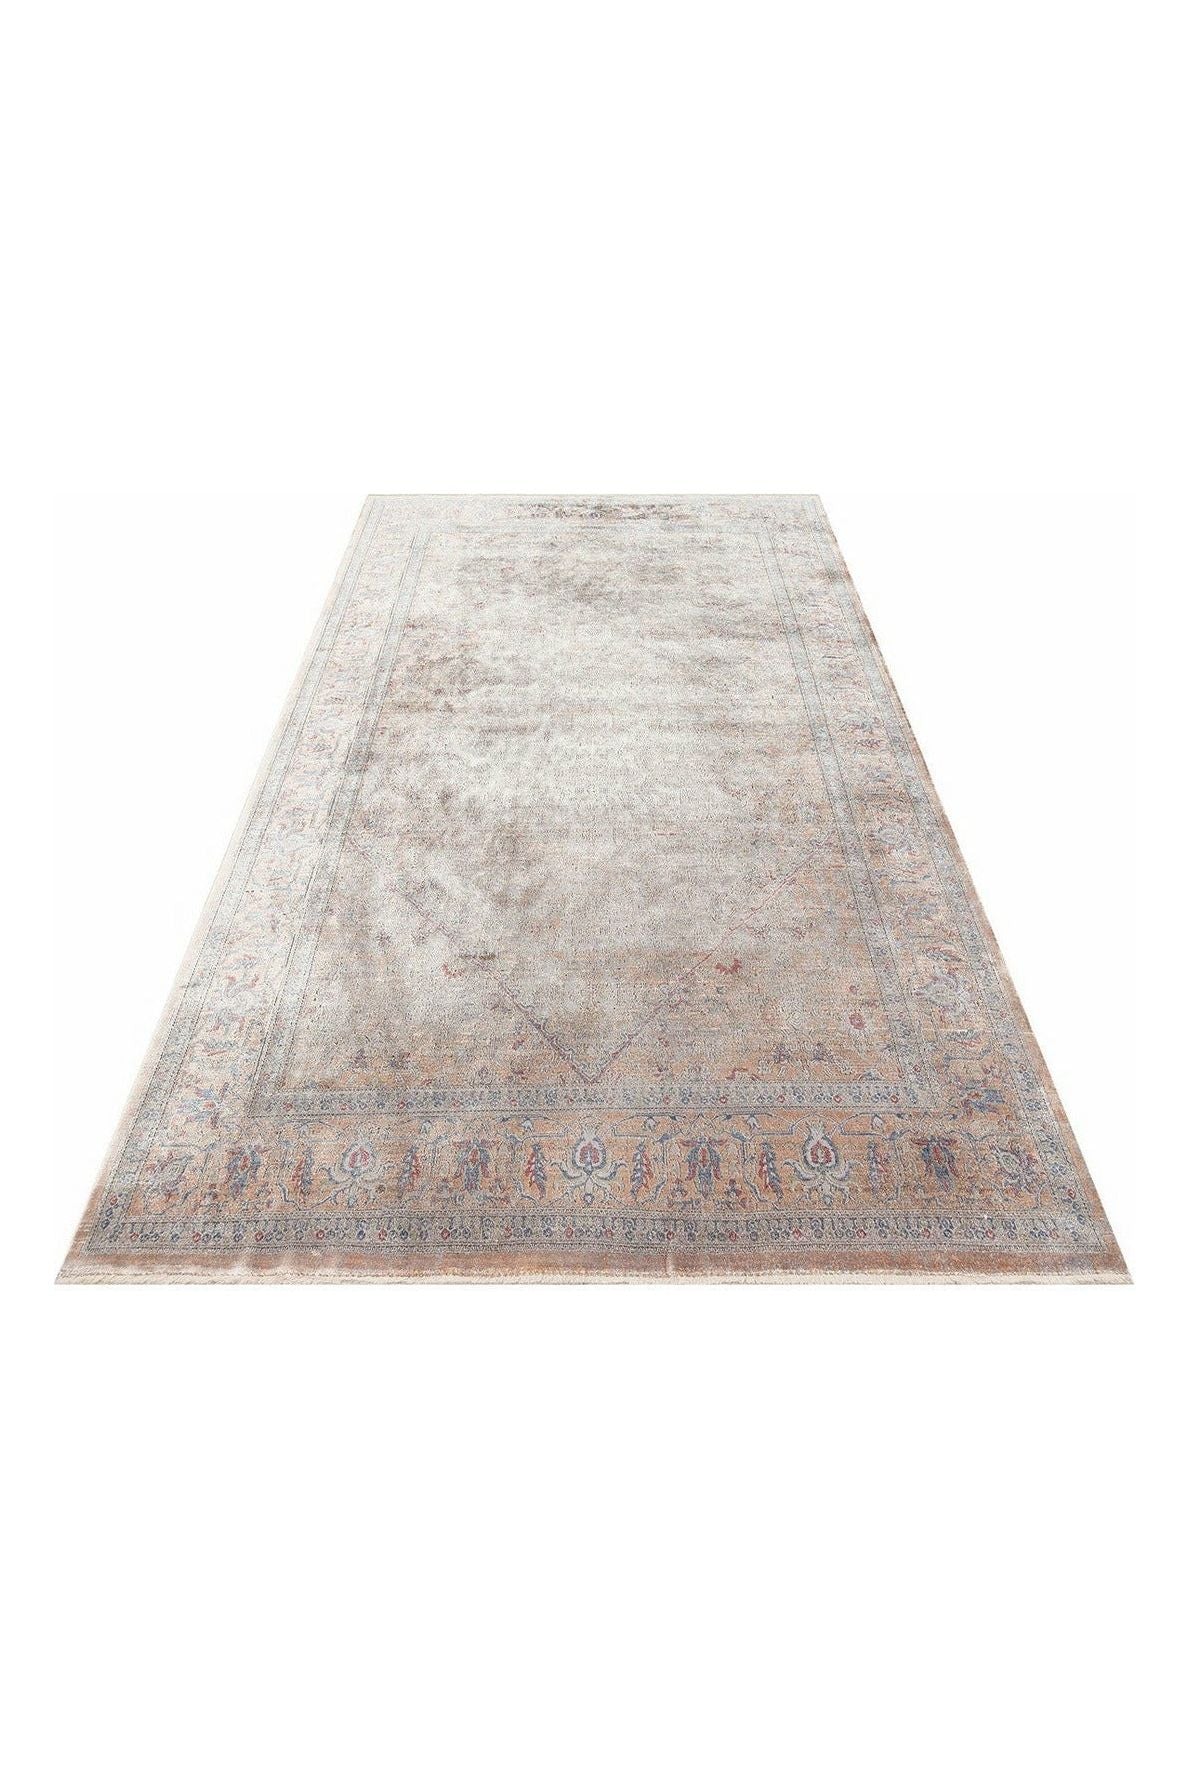 #Turkish_Carpets_Rugs# #Modern_Carpets# #Abrash_Carpets#Lhr 02 Grey